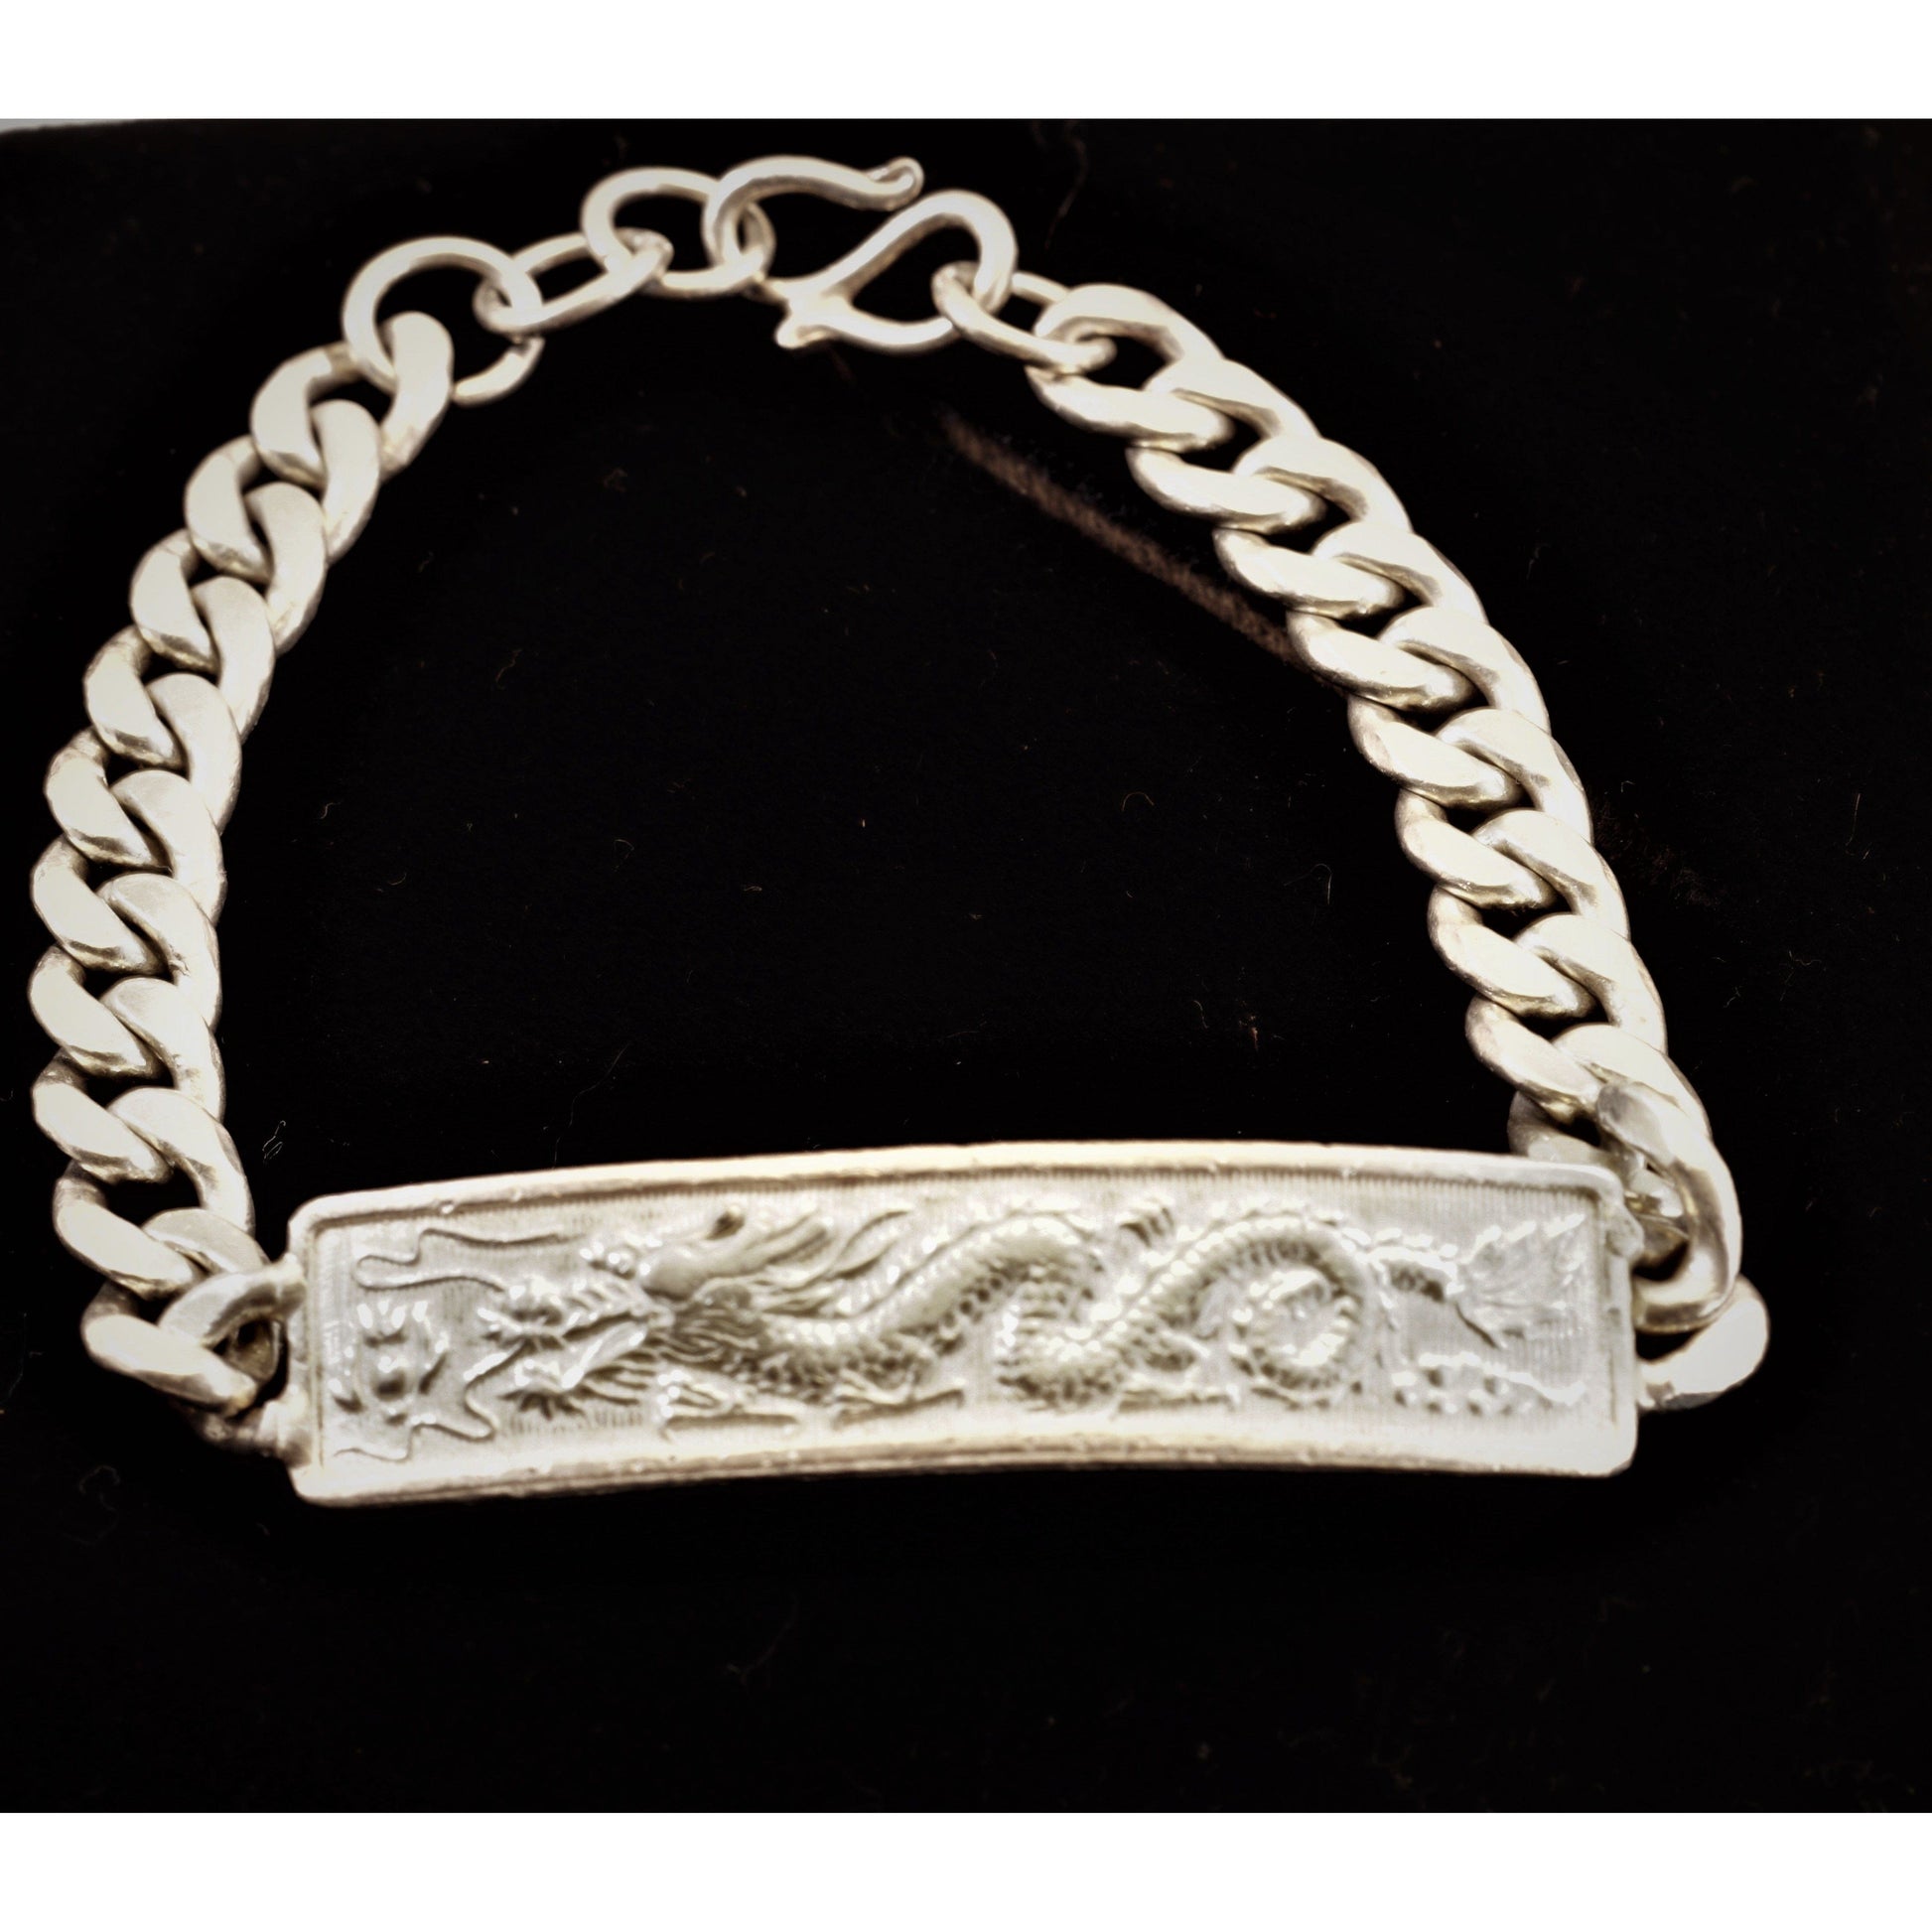 FJL Jewelry Sterling Silver Bracelet Sold! Dragon Bracelet w/ Cuban Link in Solid Sterling Silver 7"_ S-Hook Clasp